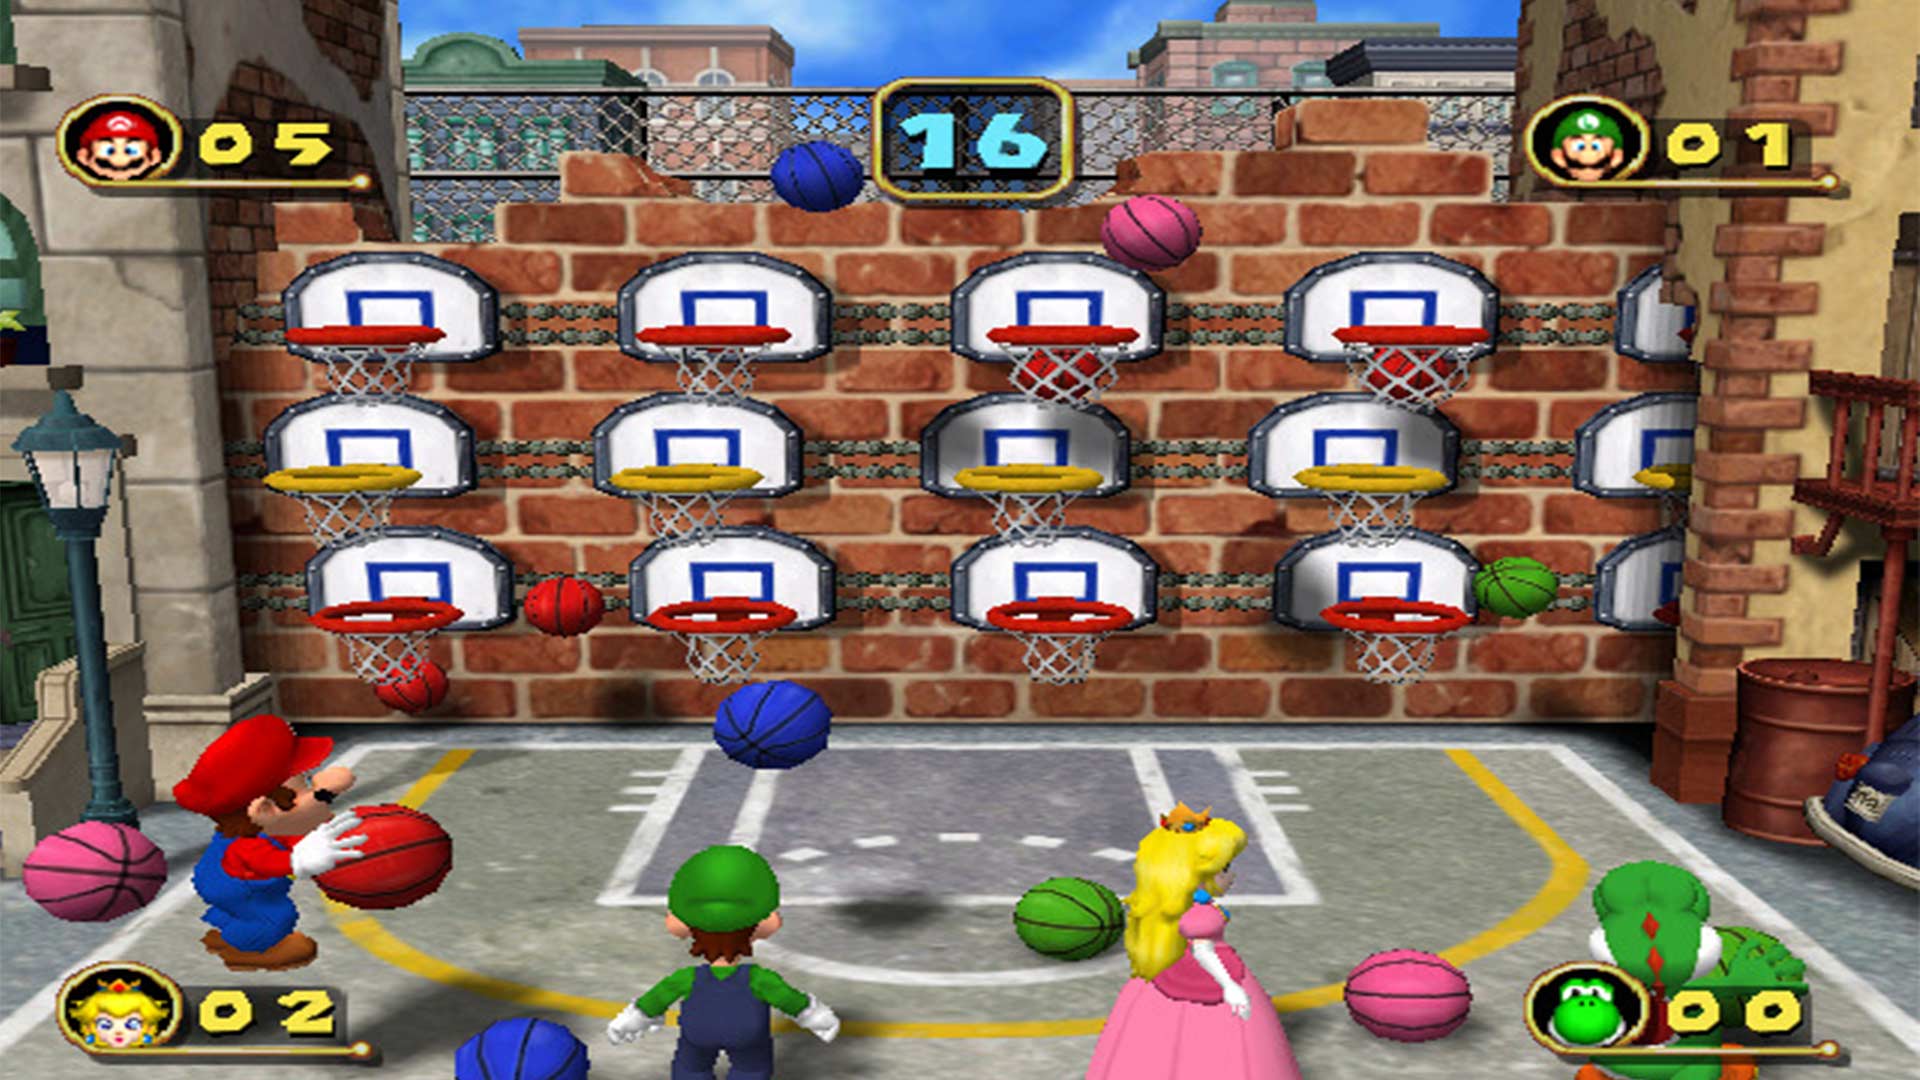 Basketball-Minispiel in Mario Party 4